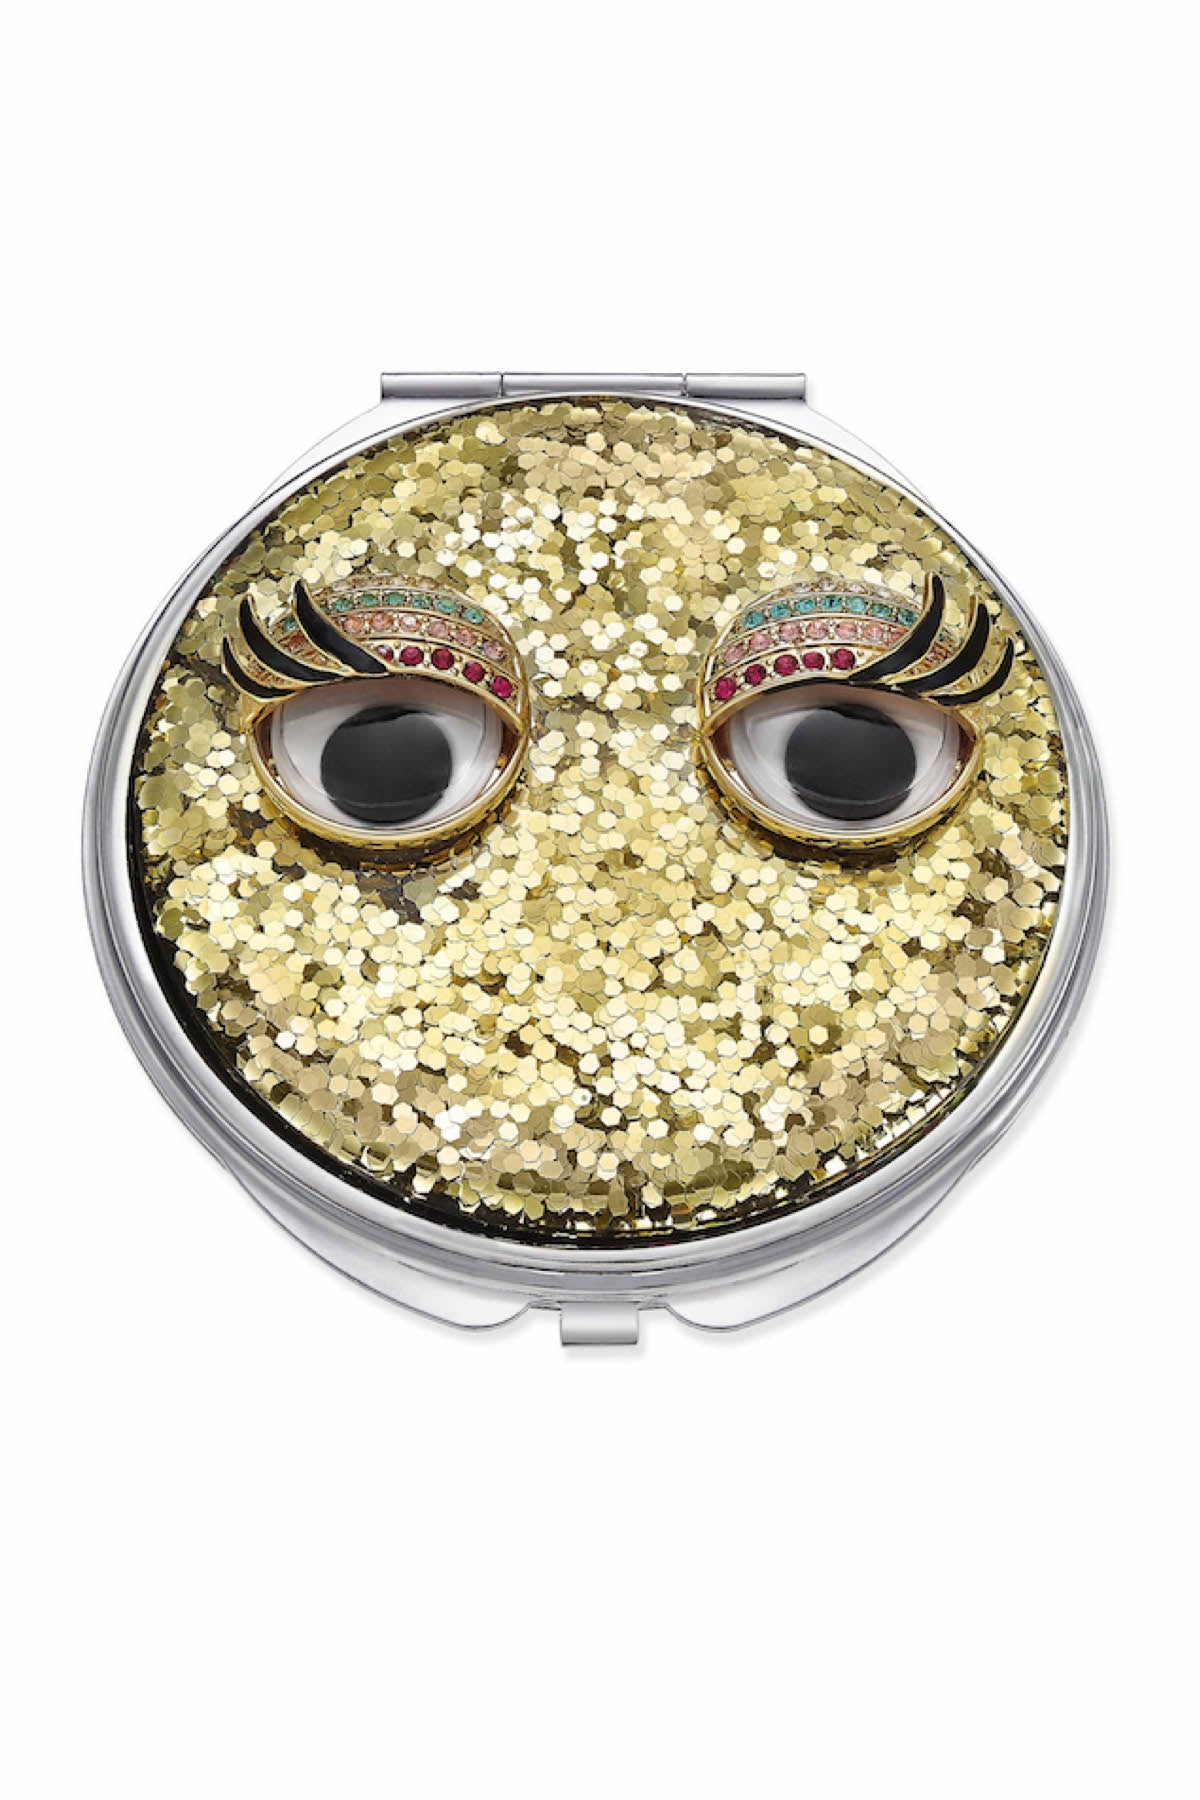 Betsey Johnson Xox Trolls Gold-Glitter Rhinestone Eyes Double Mirror Compact